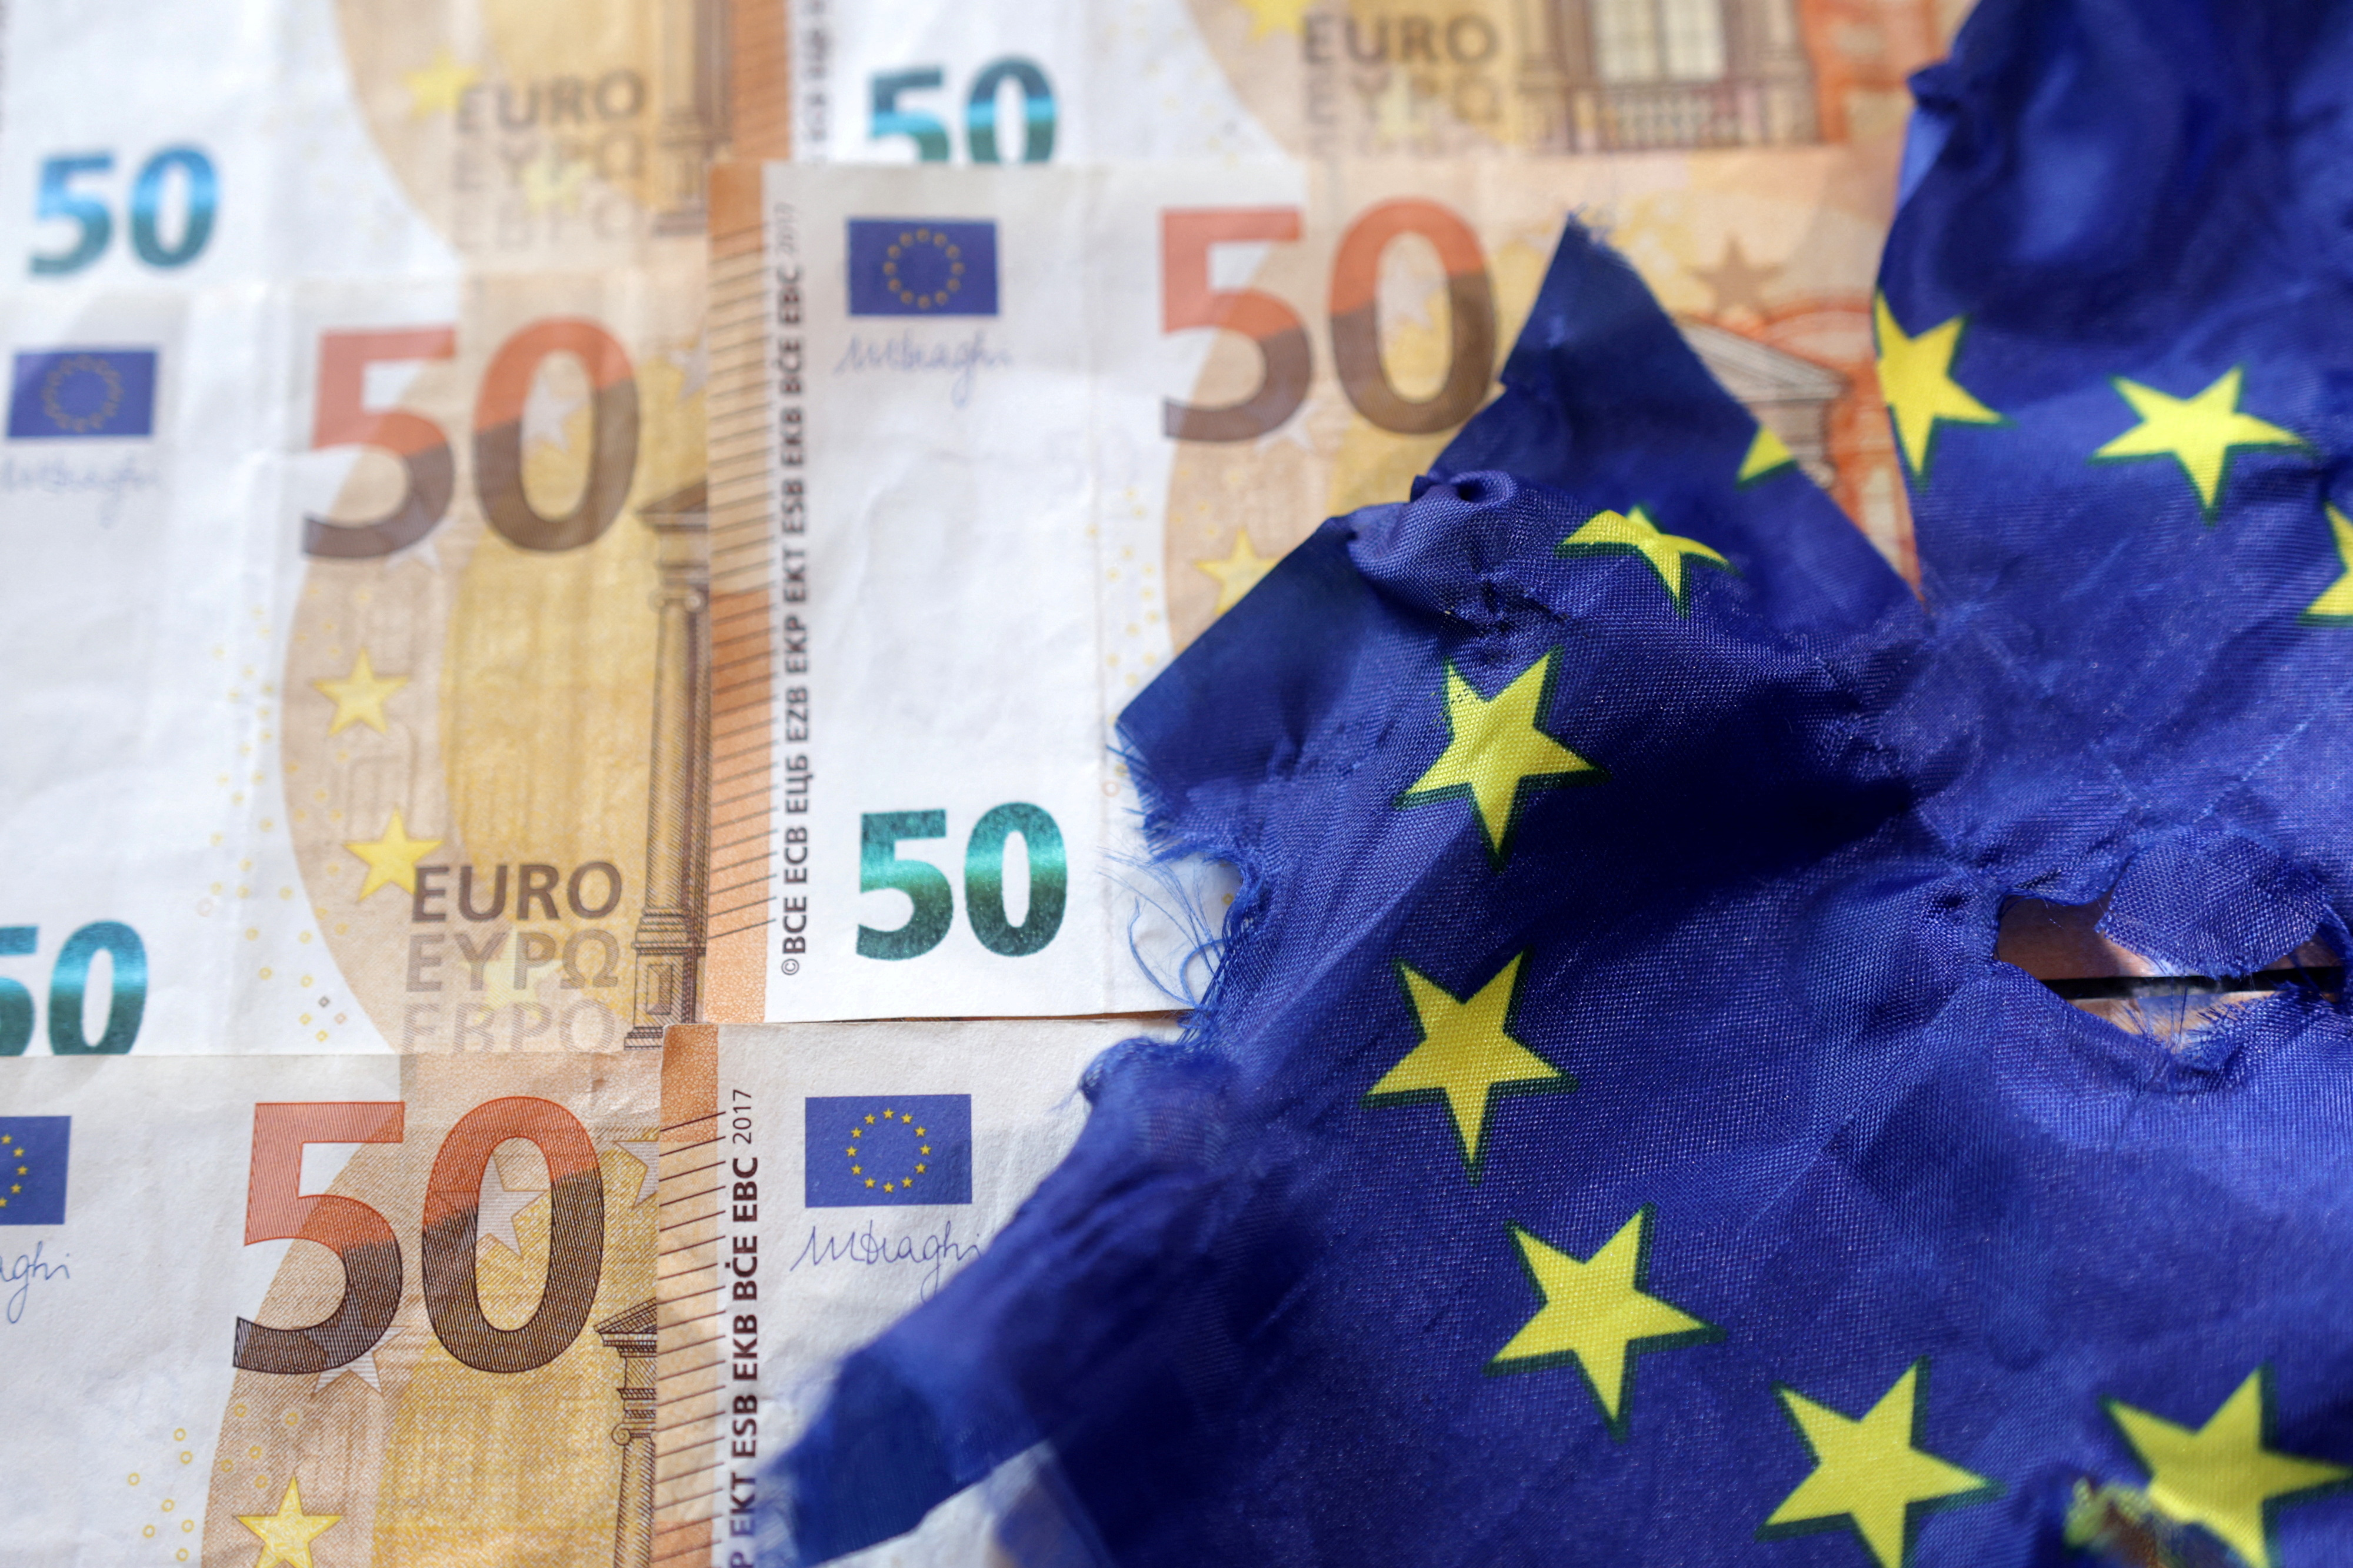 Illustration shows Euro banknotes and torn EU flag